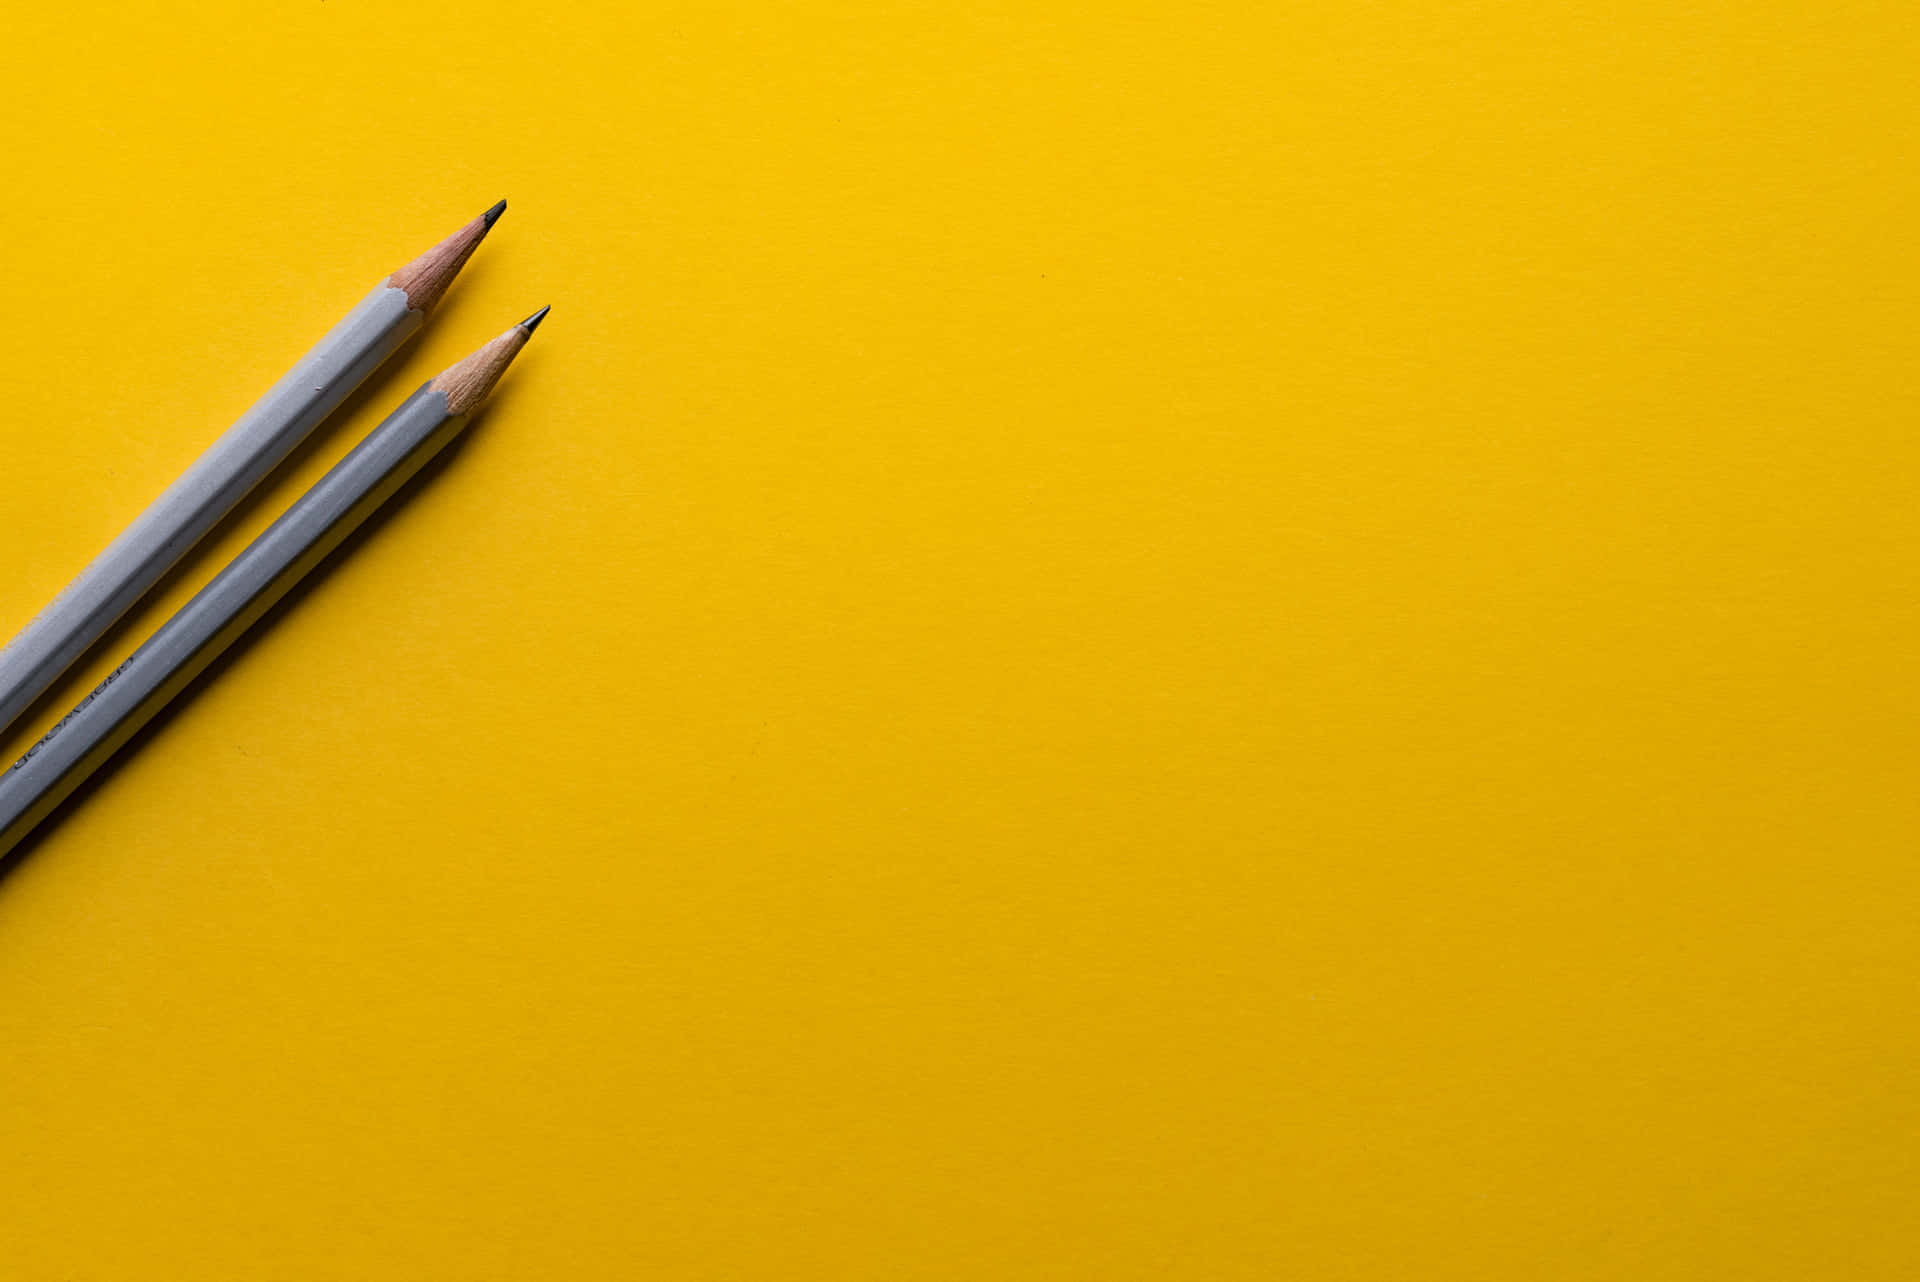 To grå blyanter på gul bordfarve baggrund